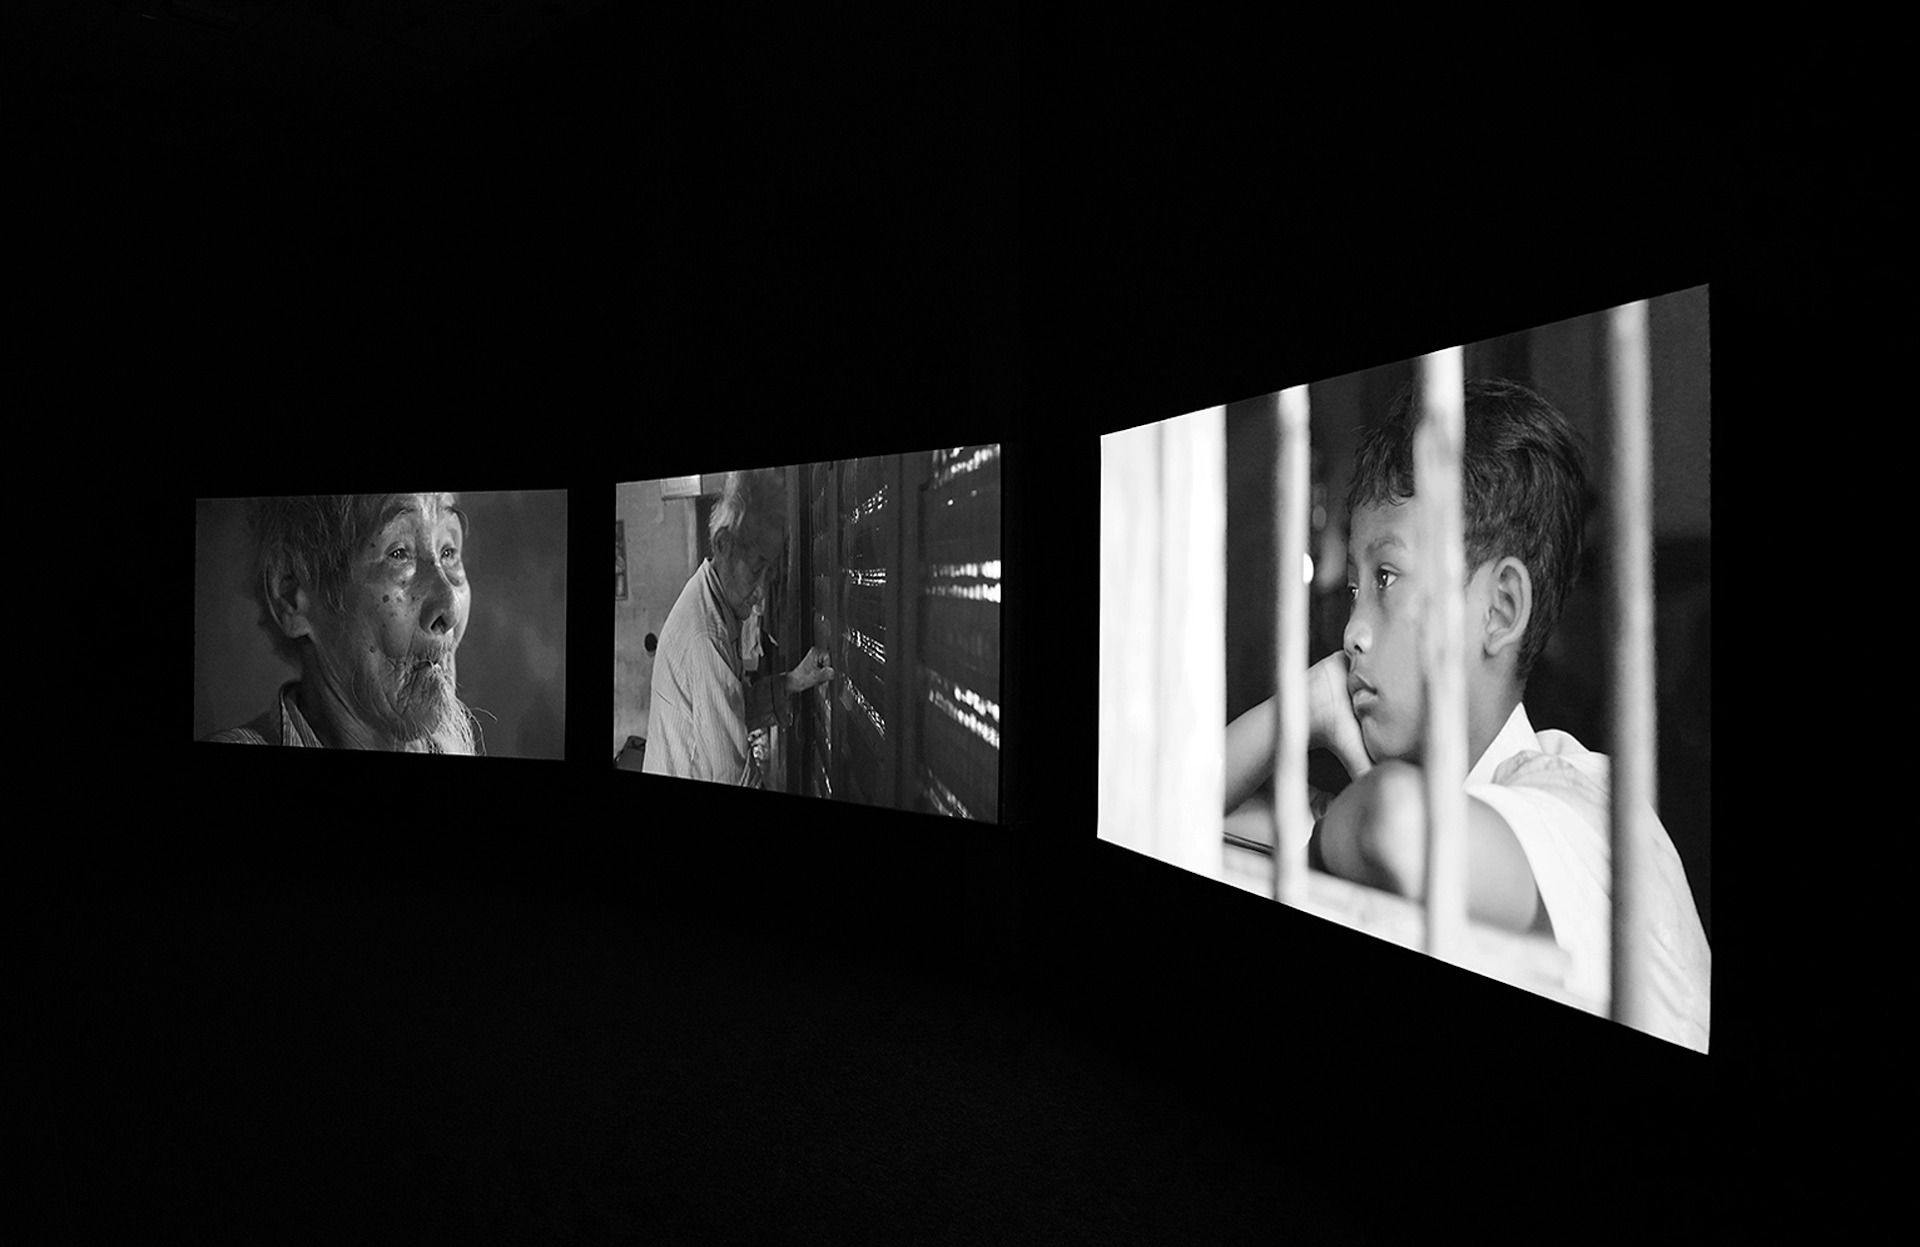 a 3 channel art work installed in a dark gallery space. 